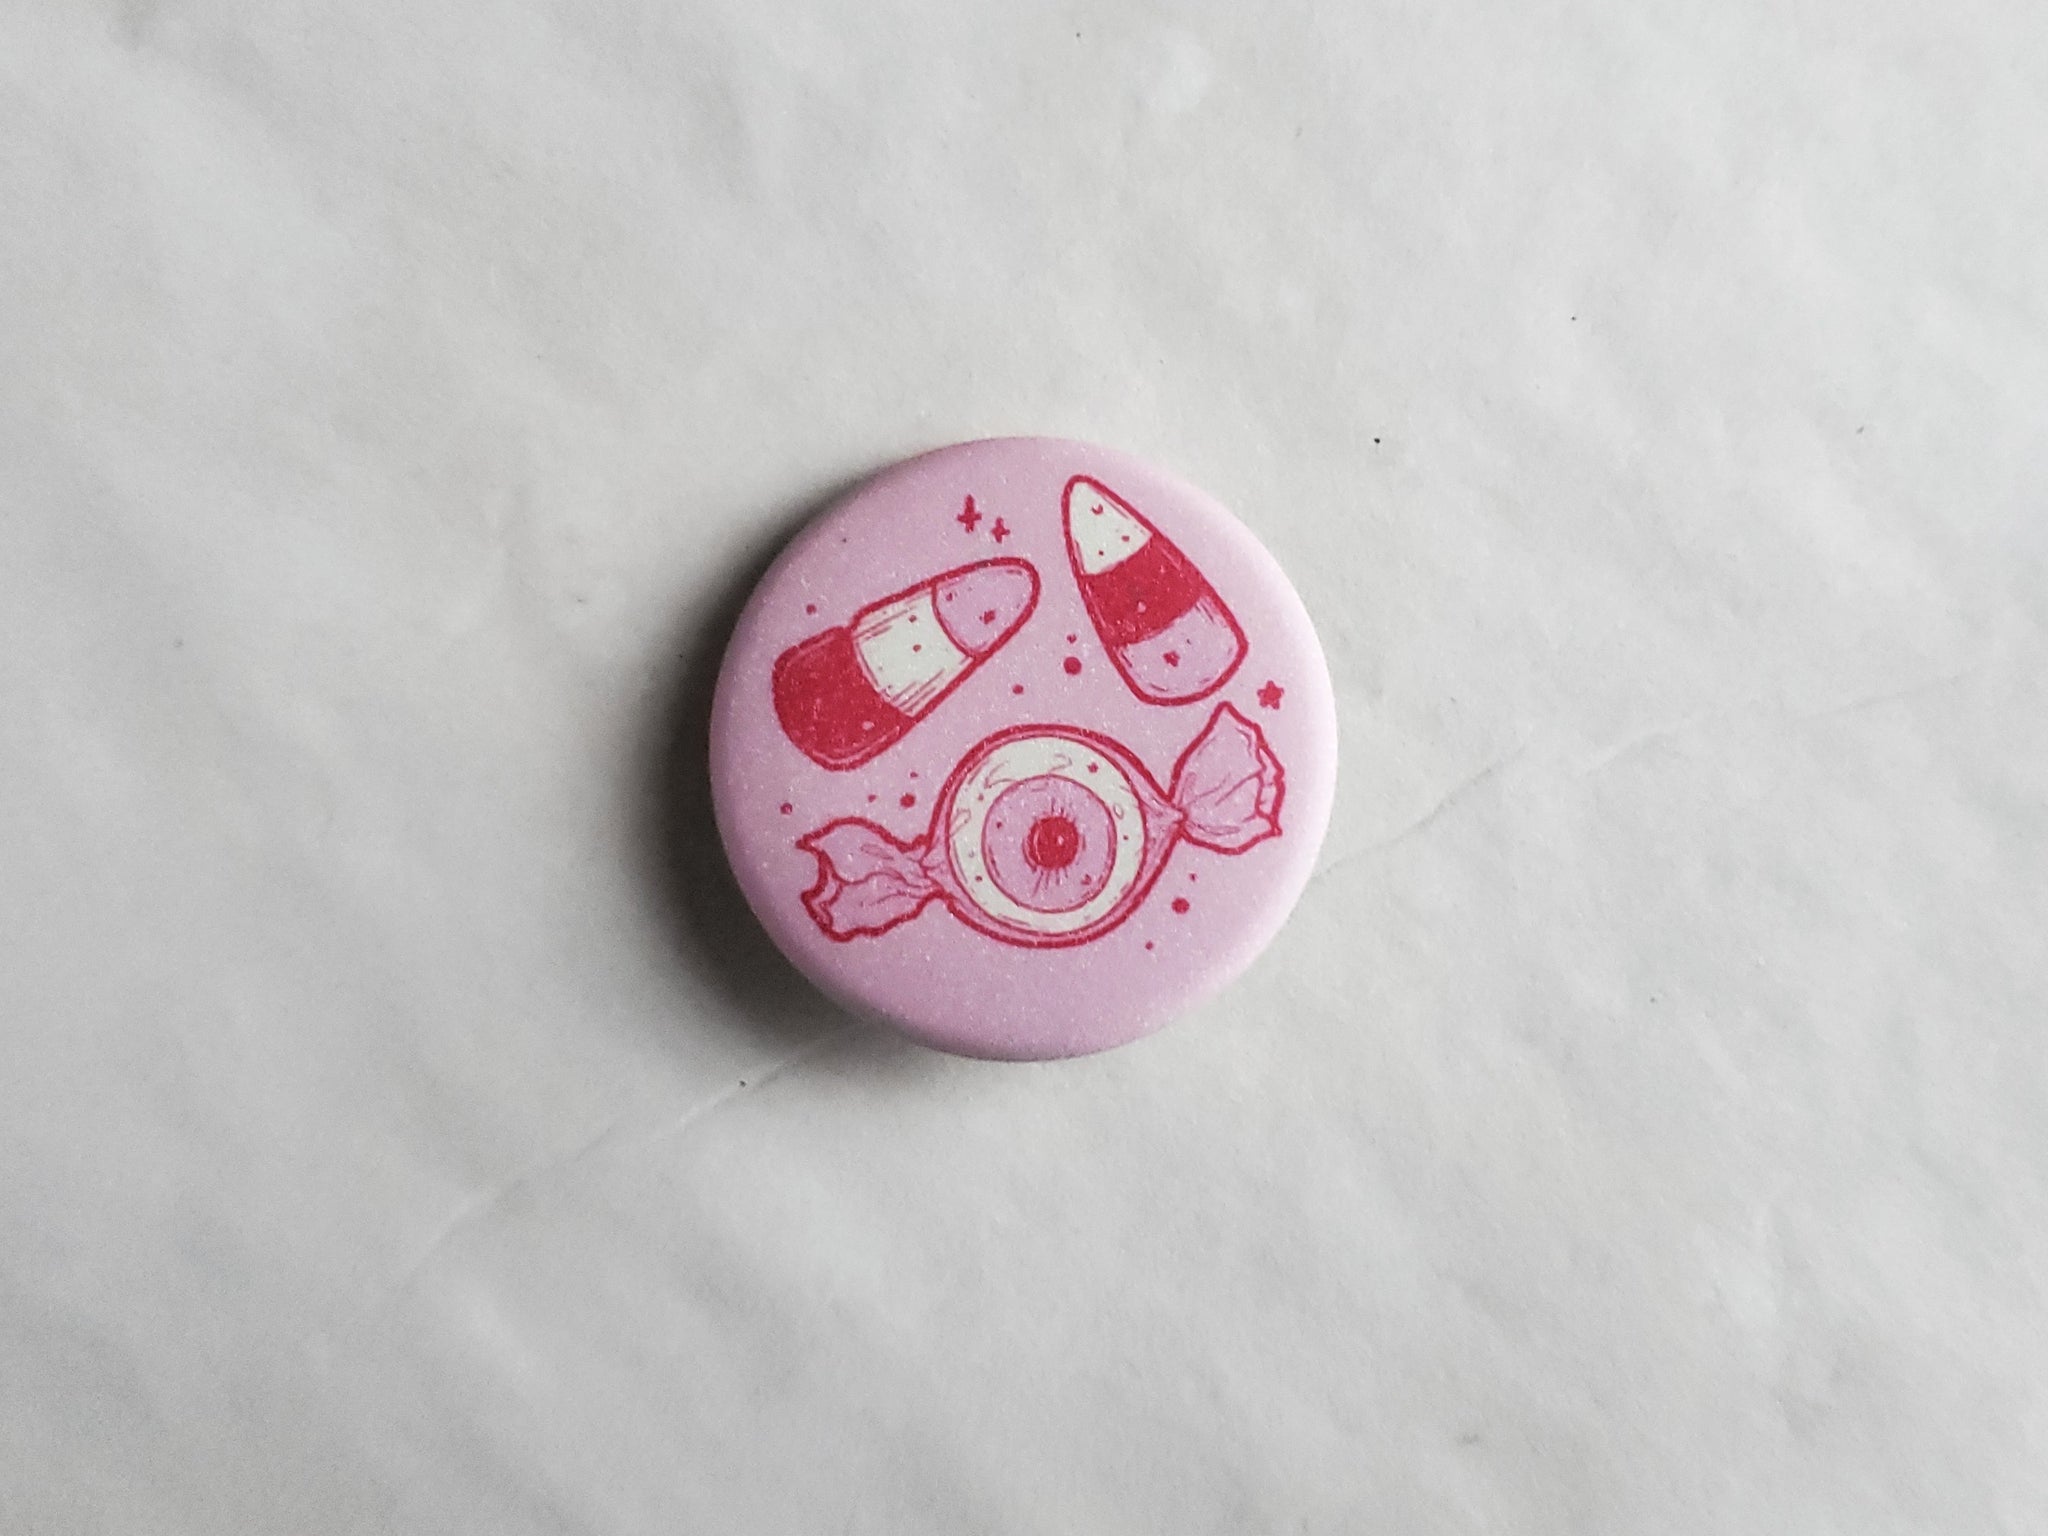 Pink Halloween Candy pin badge